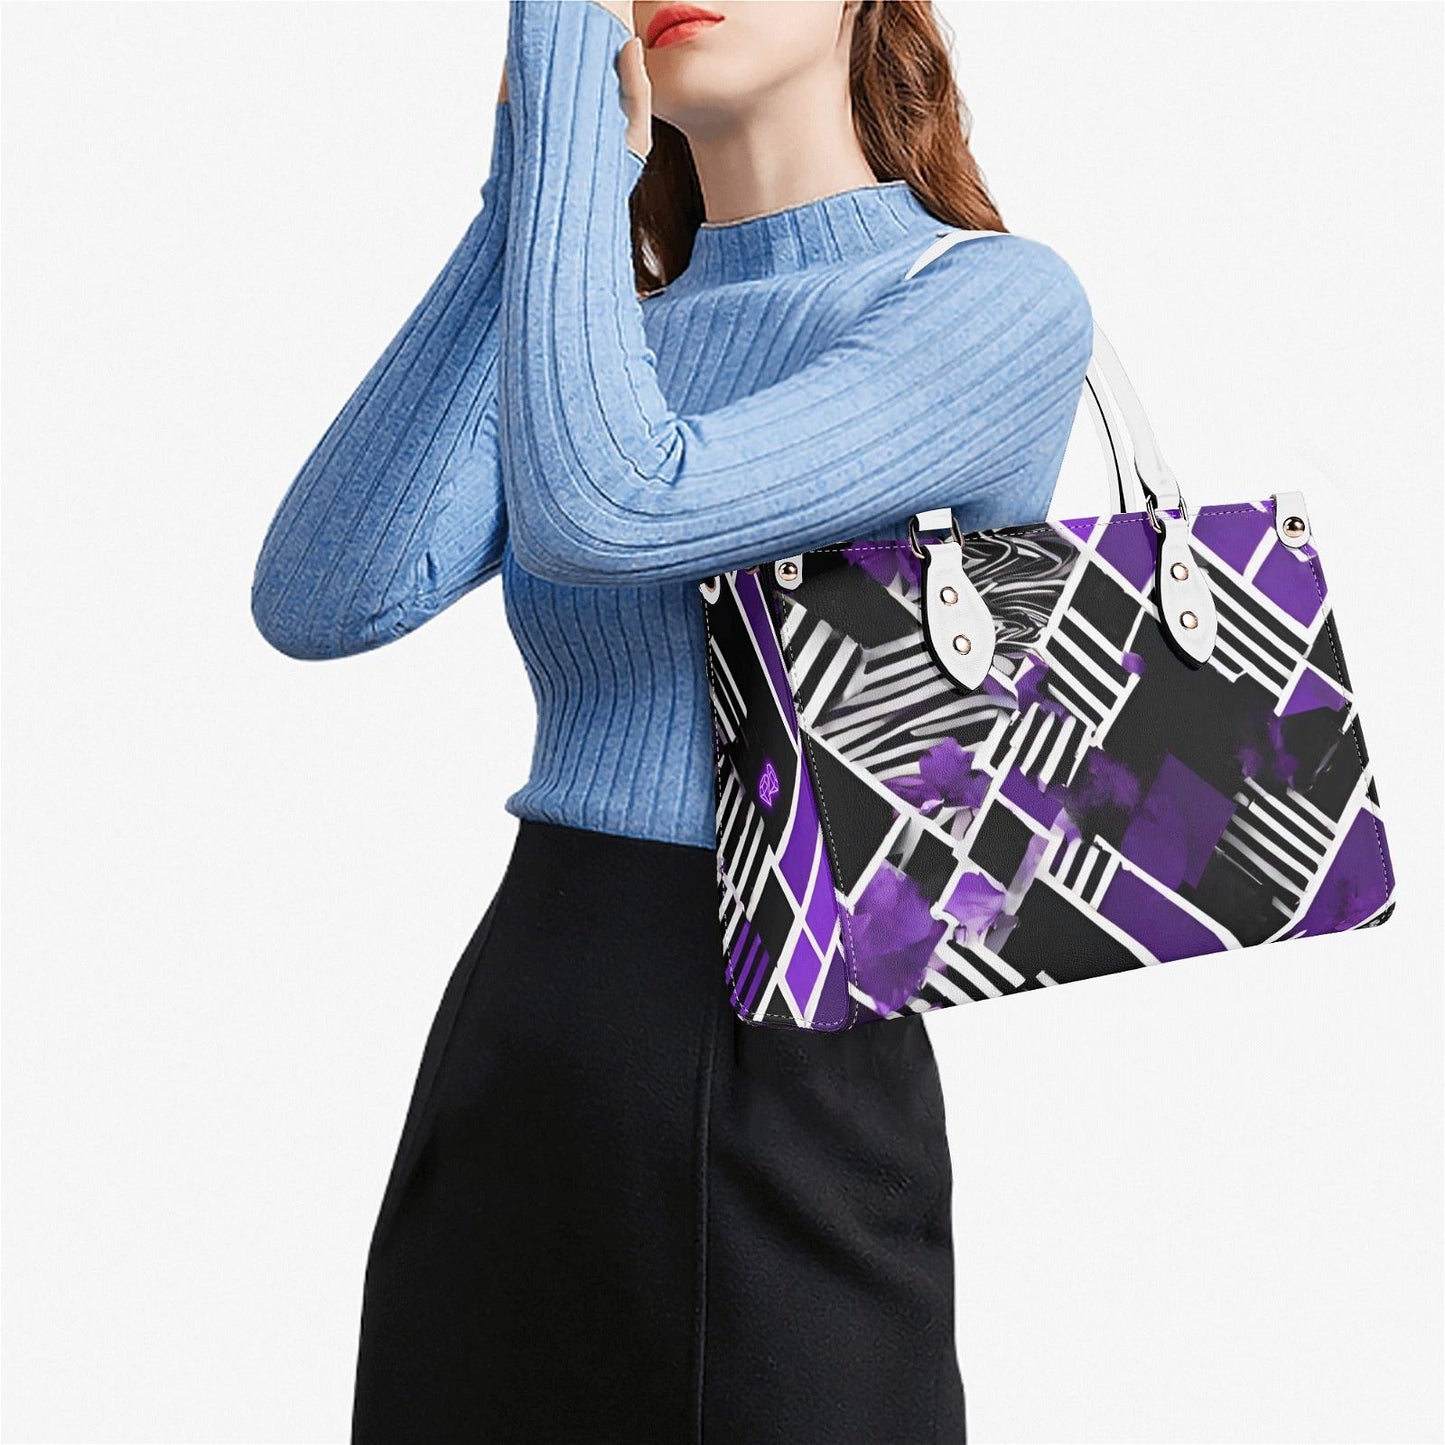 Purple Pixelated Women's Handbag- Stylish and Functional - Iron Phoenix GHG